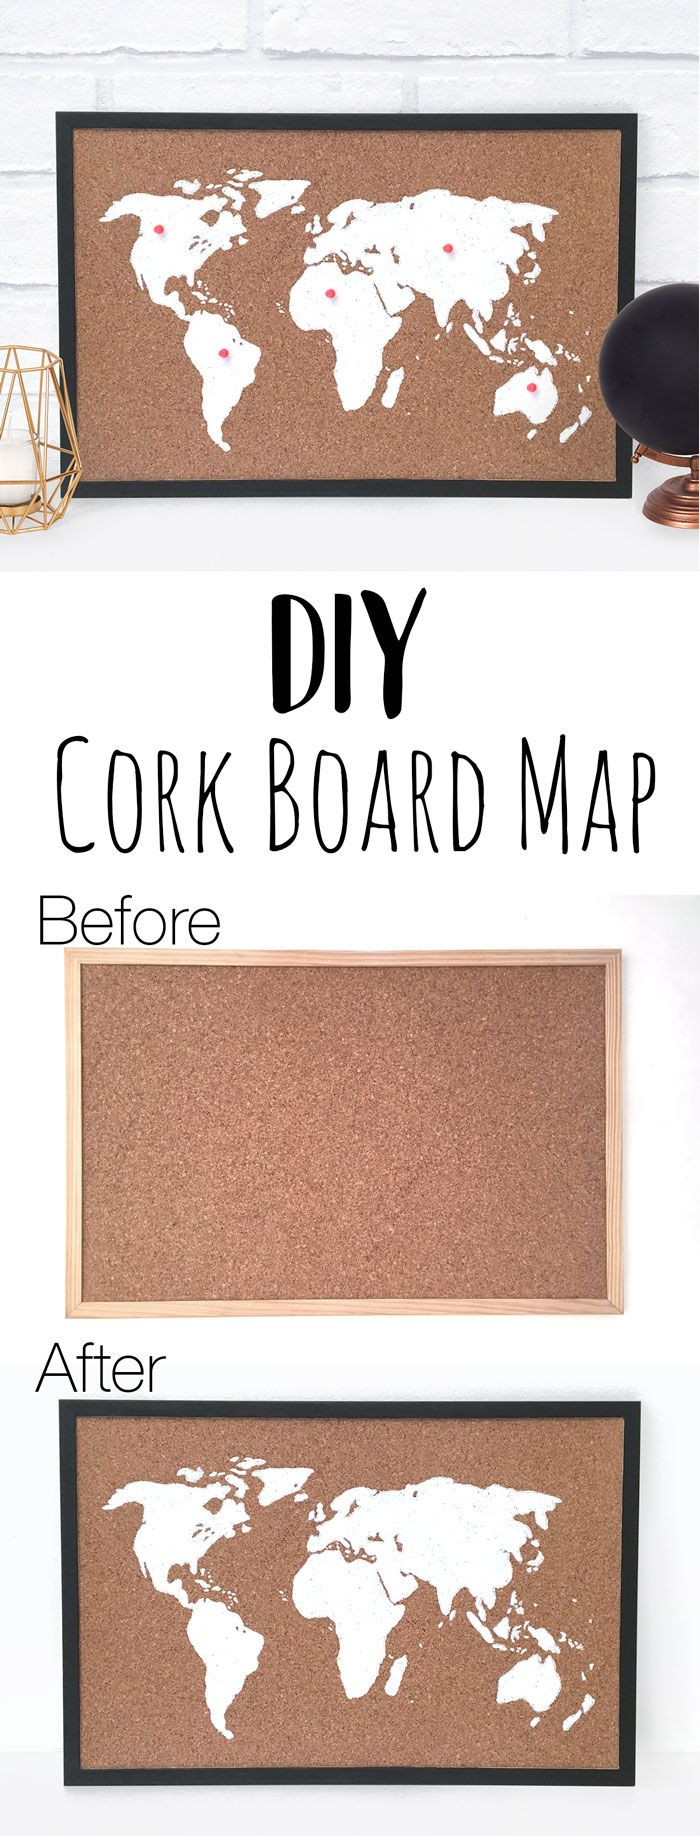 Best ideas about DIY Bulletin Board
. Save or Pin Best 25 Diy cork board ideas on Pinterest Now.